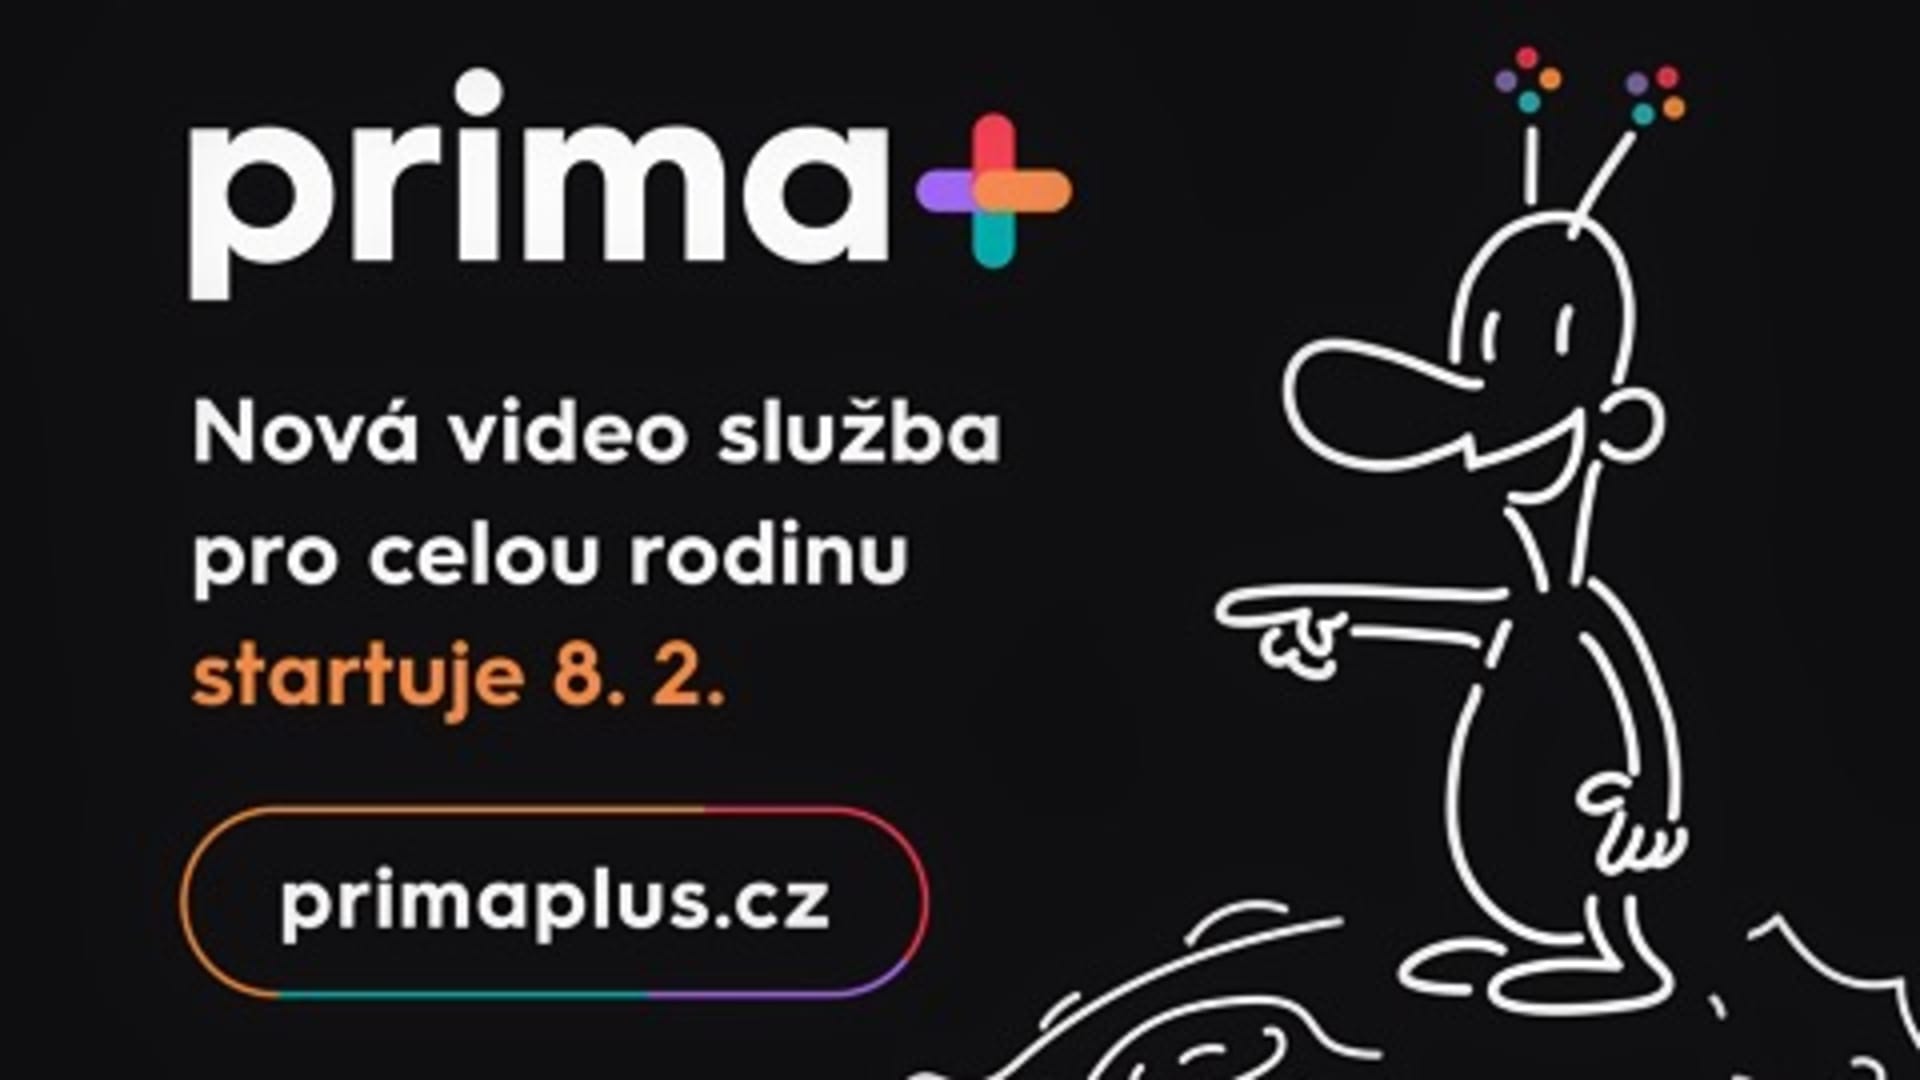 Streamovací služba prima startuje od 8. února na primaplus.cz